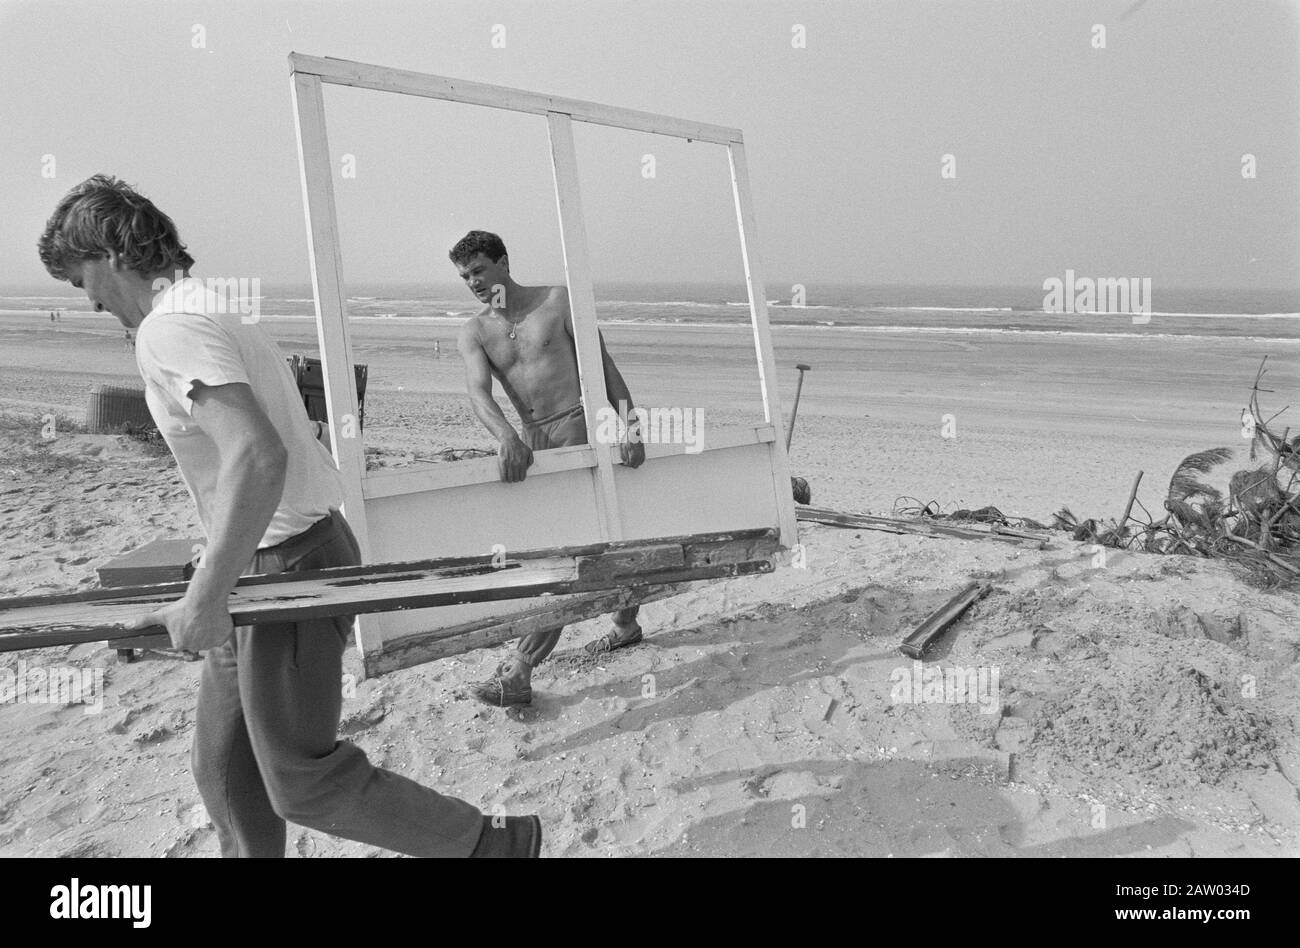 Failed seasonal beach leaseholders; breaking down beach club in Zandvoort Date: September 21, 1987 Location: North-Holland, Zandvoort Keywords: pavilions, beaches Stock Photo